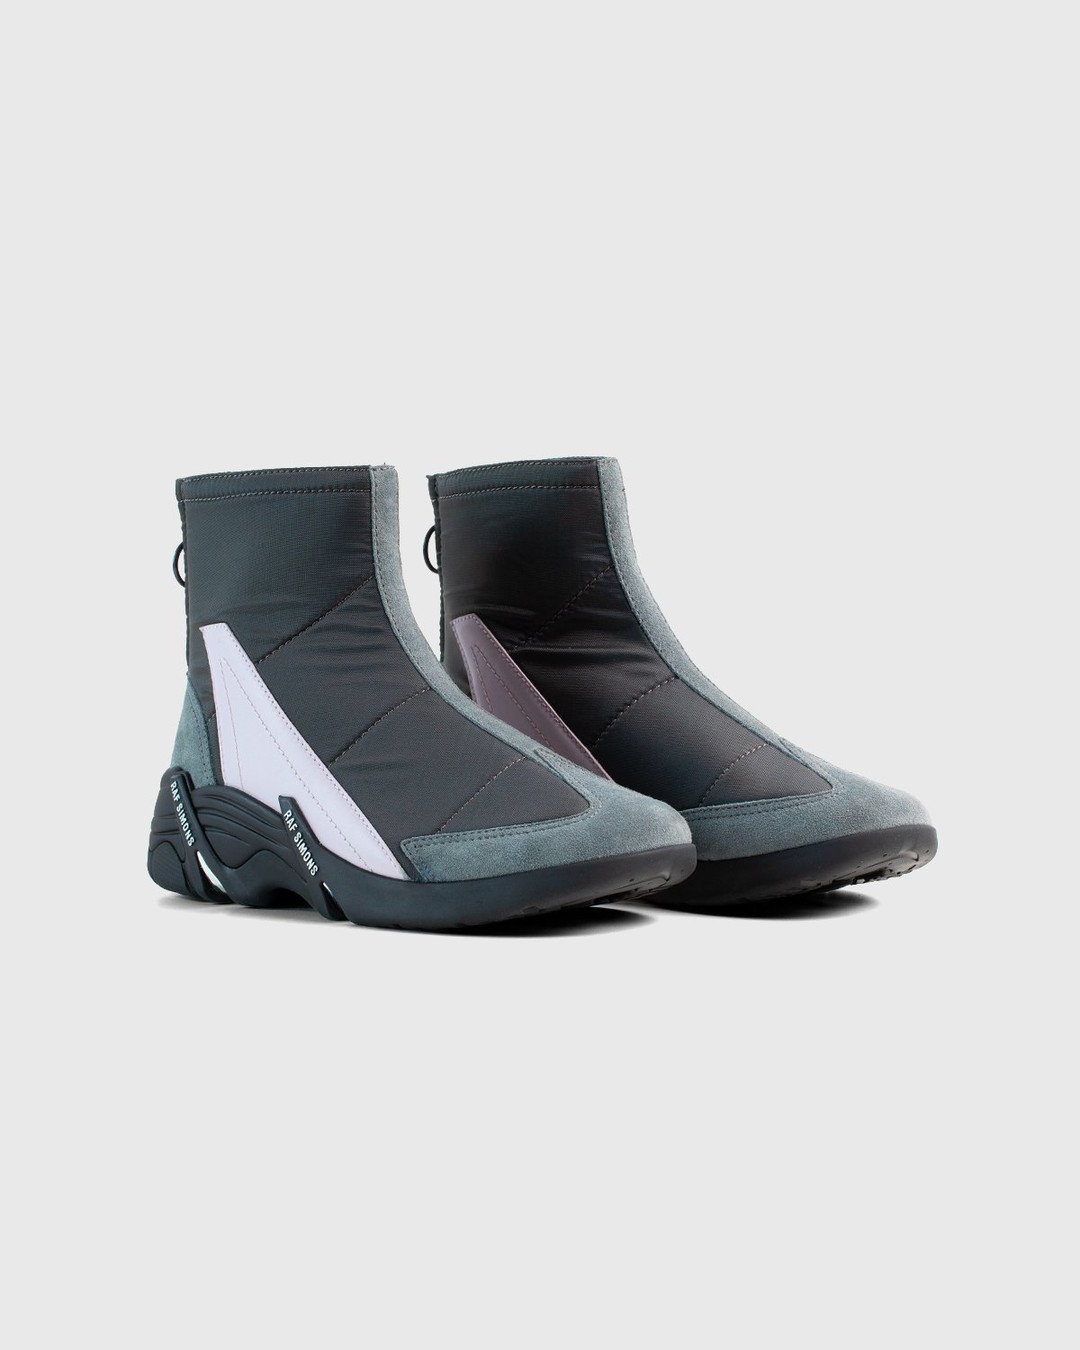 Raf Simons – Cylon 22 Antracite - High Top Sneakers - Grey - Image 2